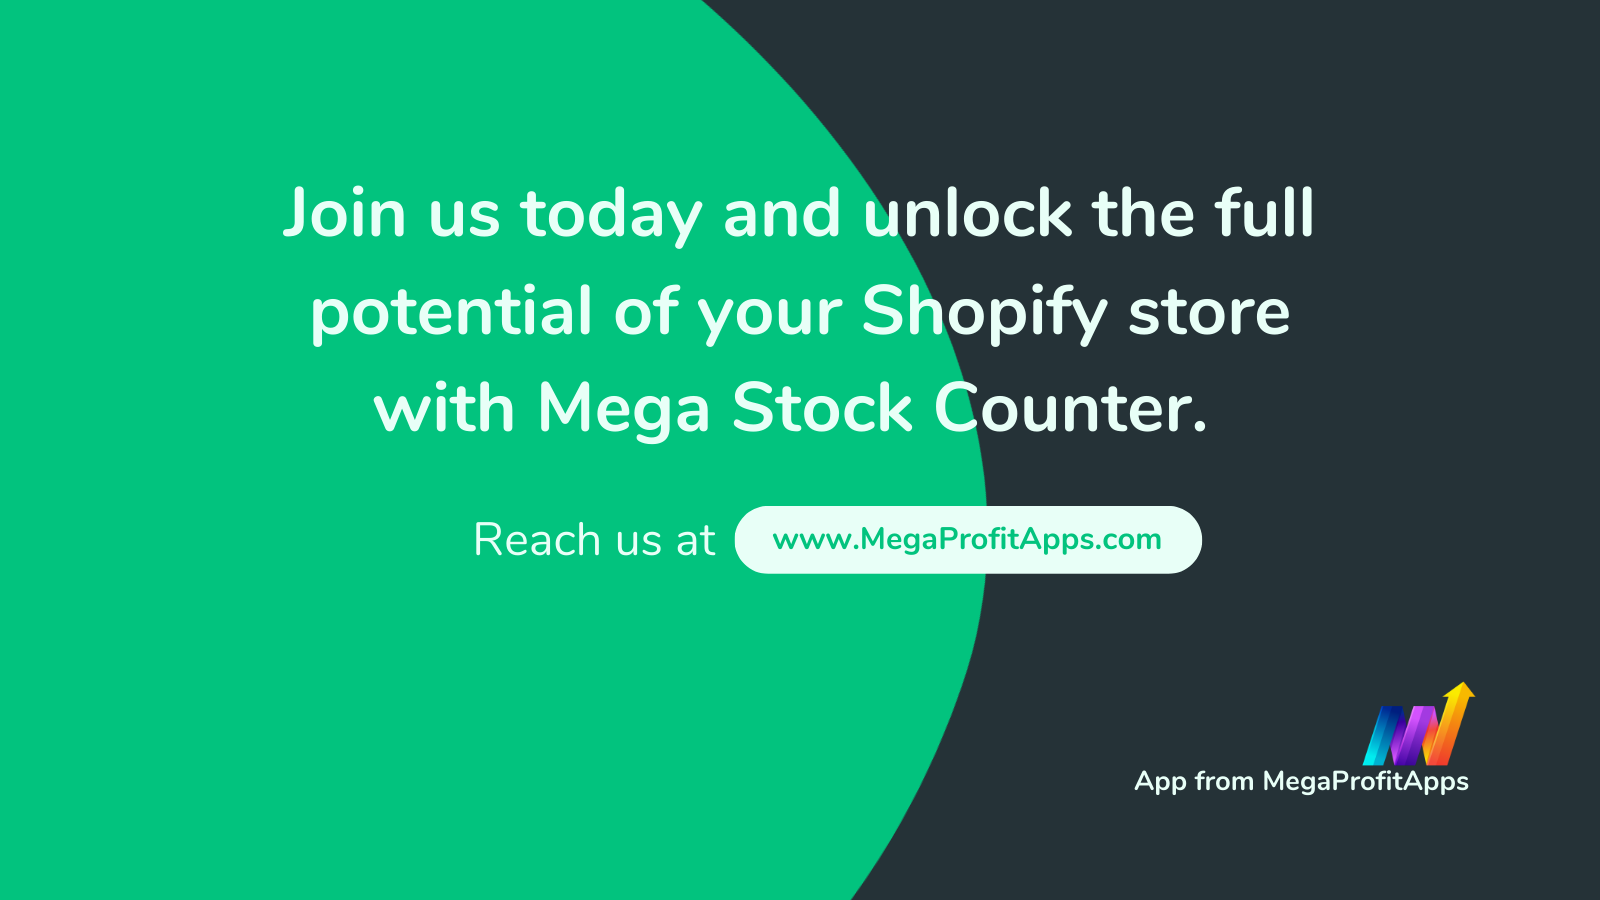 Mega Stock Counter by MegaProfitApps.com